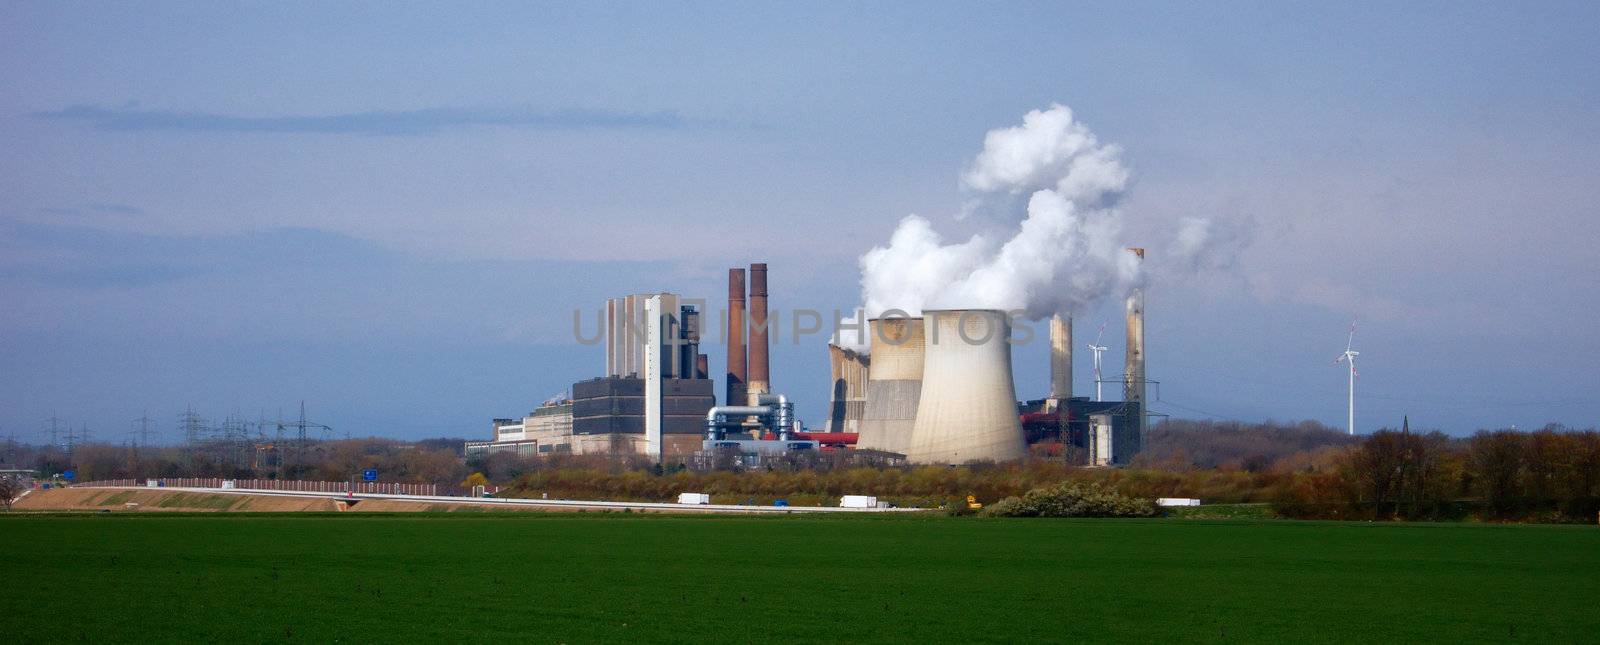 Power plant by saasemen